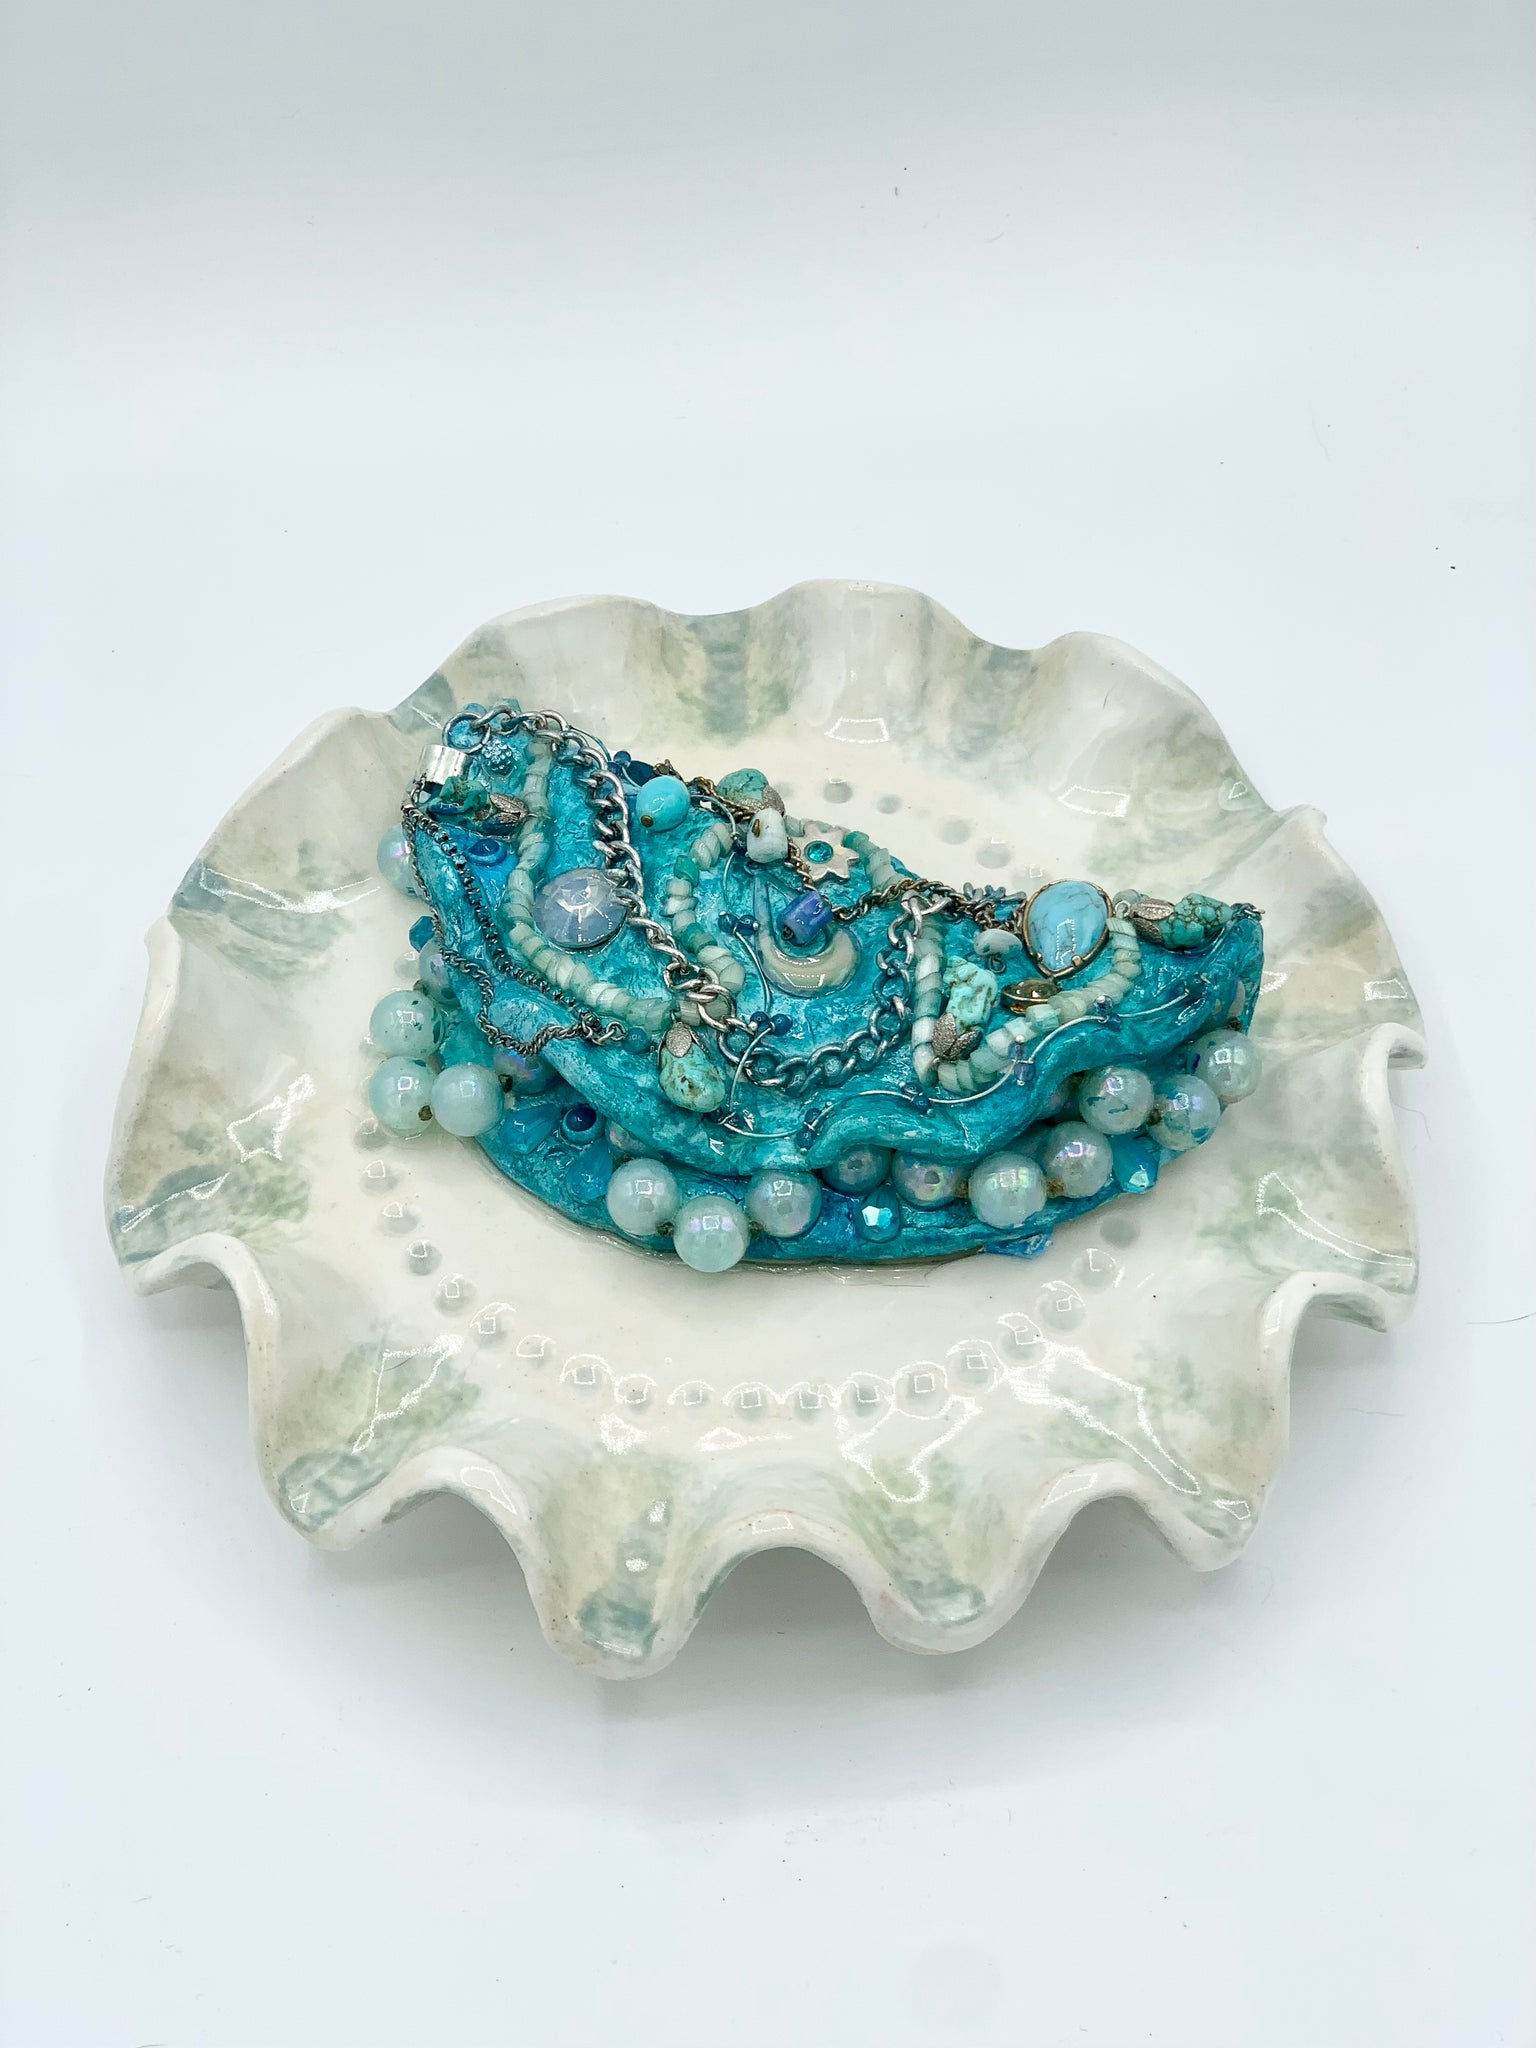 Mary Gagler, "Fabergé Omelet (Blue)"